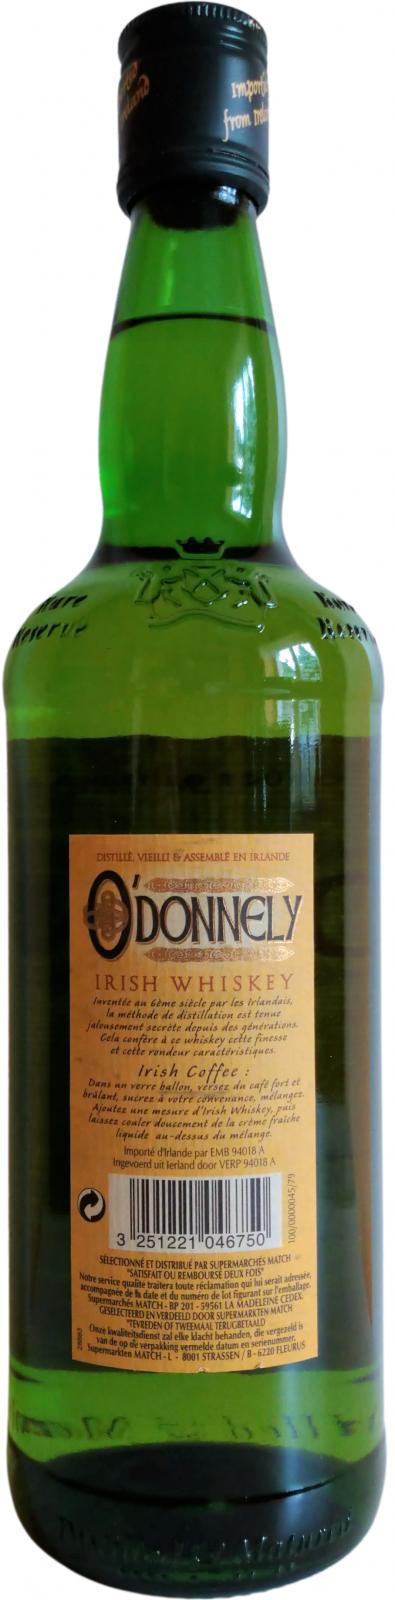 O'Donnely Irish Whiskey